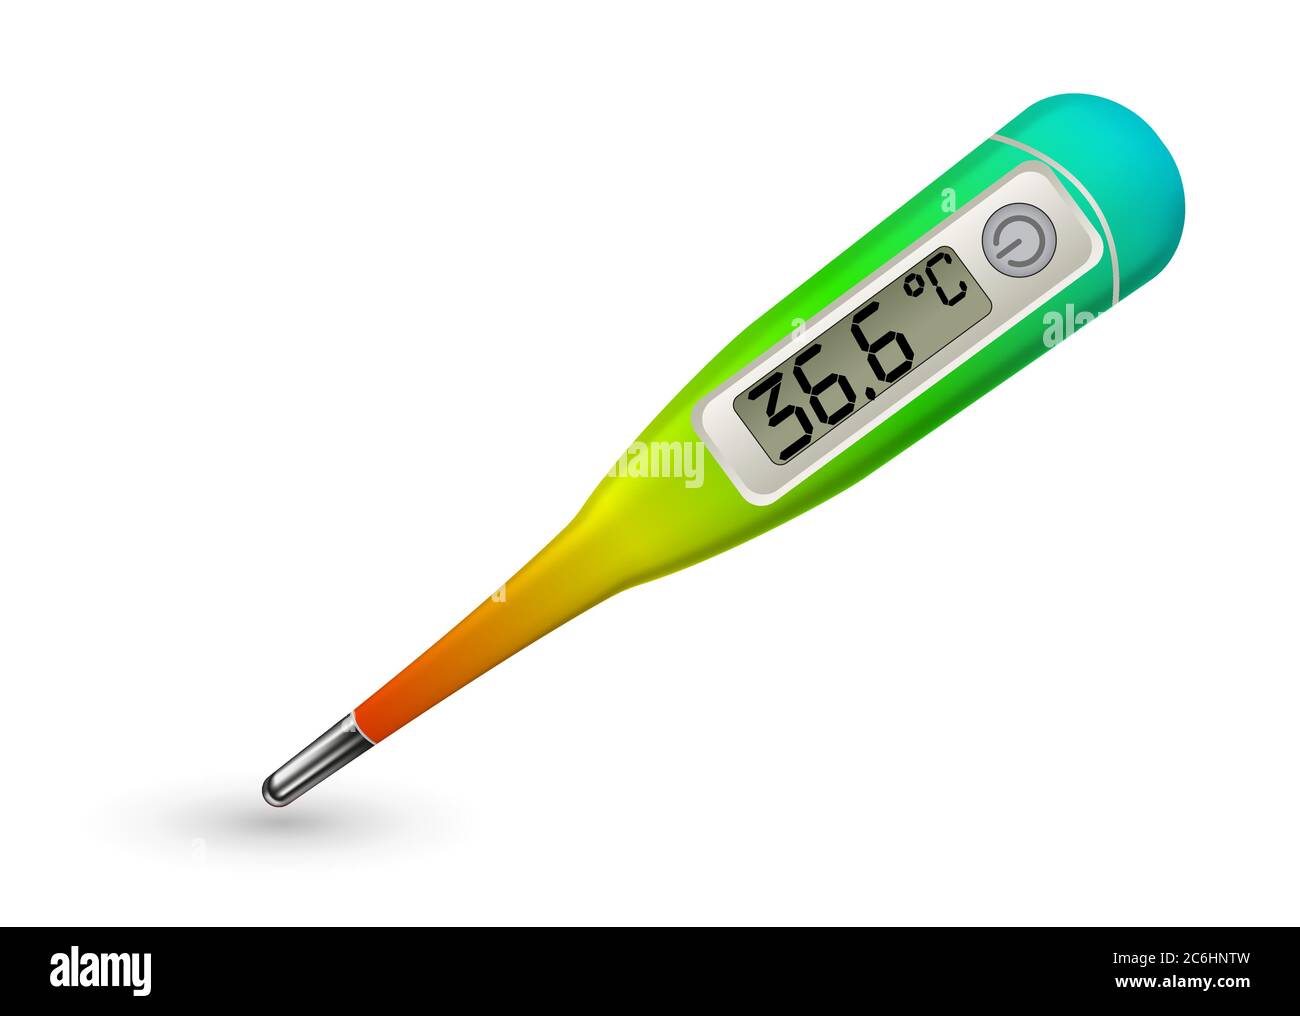 https://c8.alamy.com/comp/2C6HNTW/medical-digital-thermometer-temperature-measurement-health-recovery-366-2C6HNTW.jpg